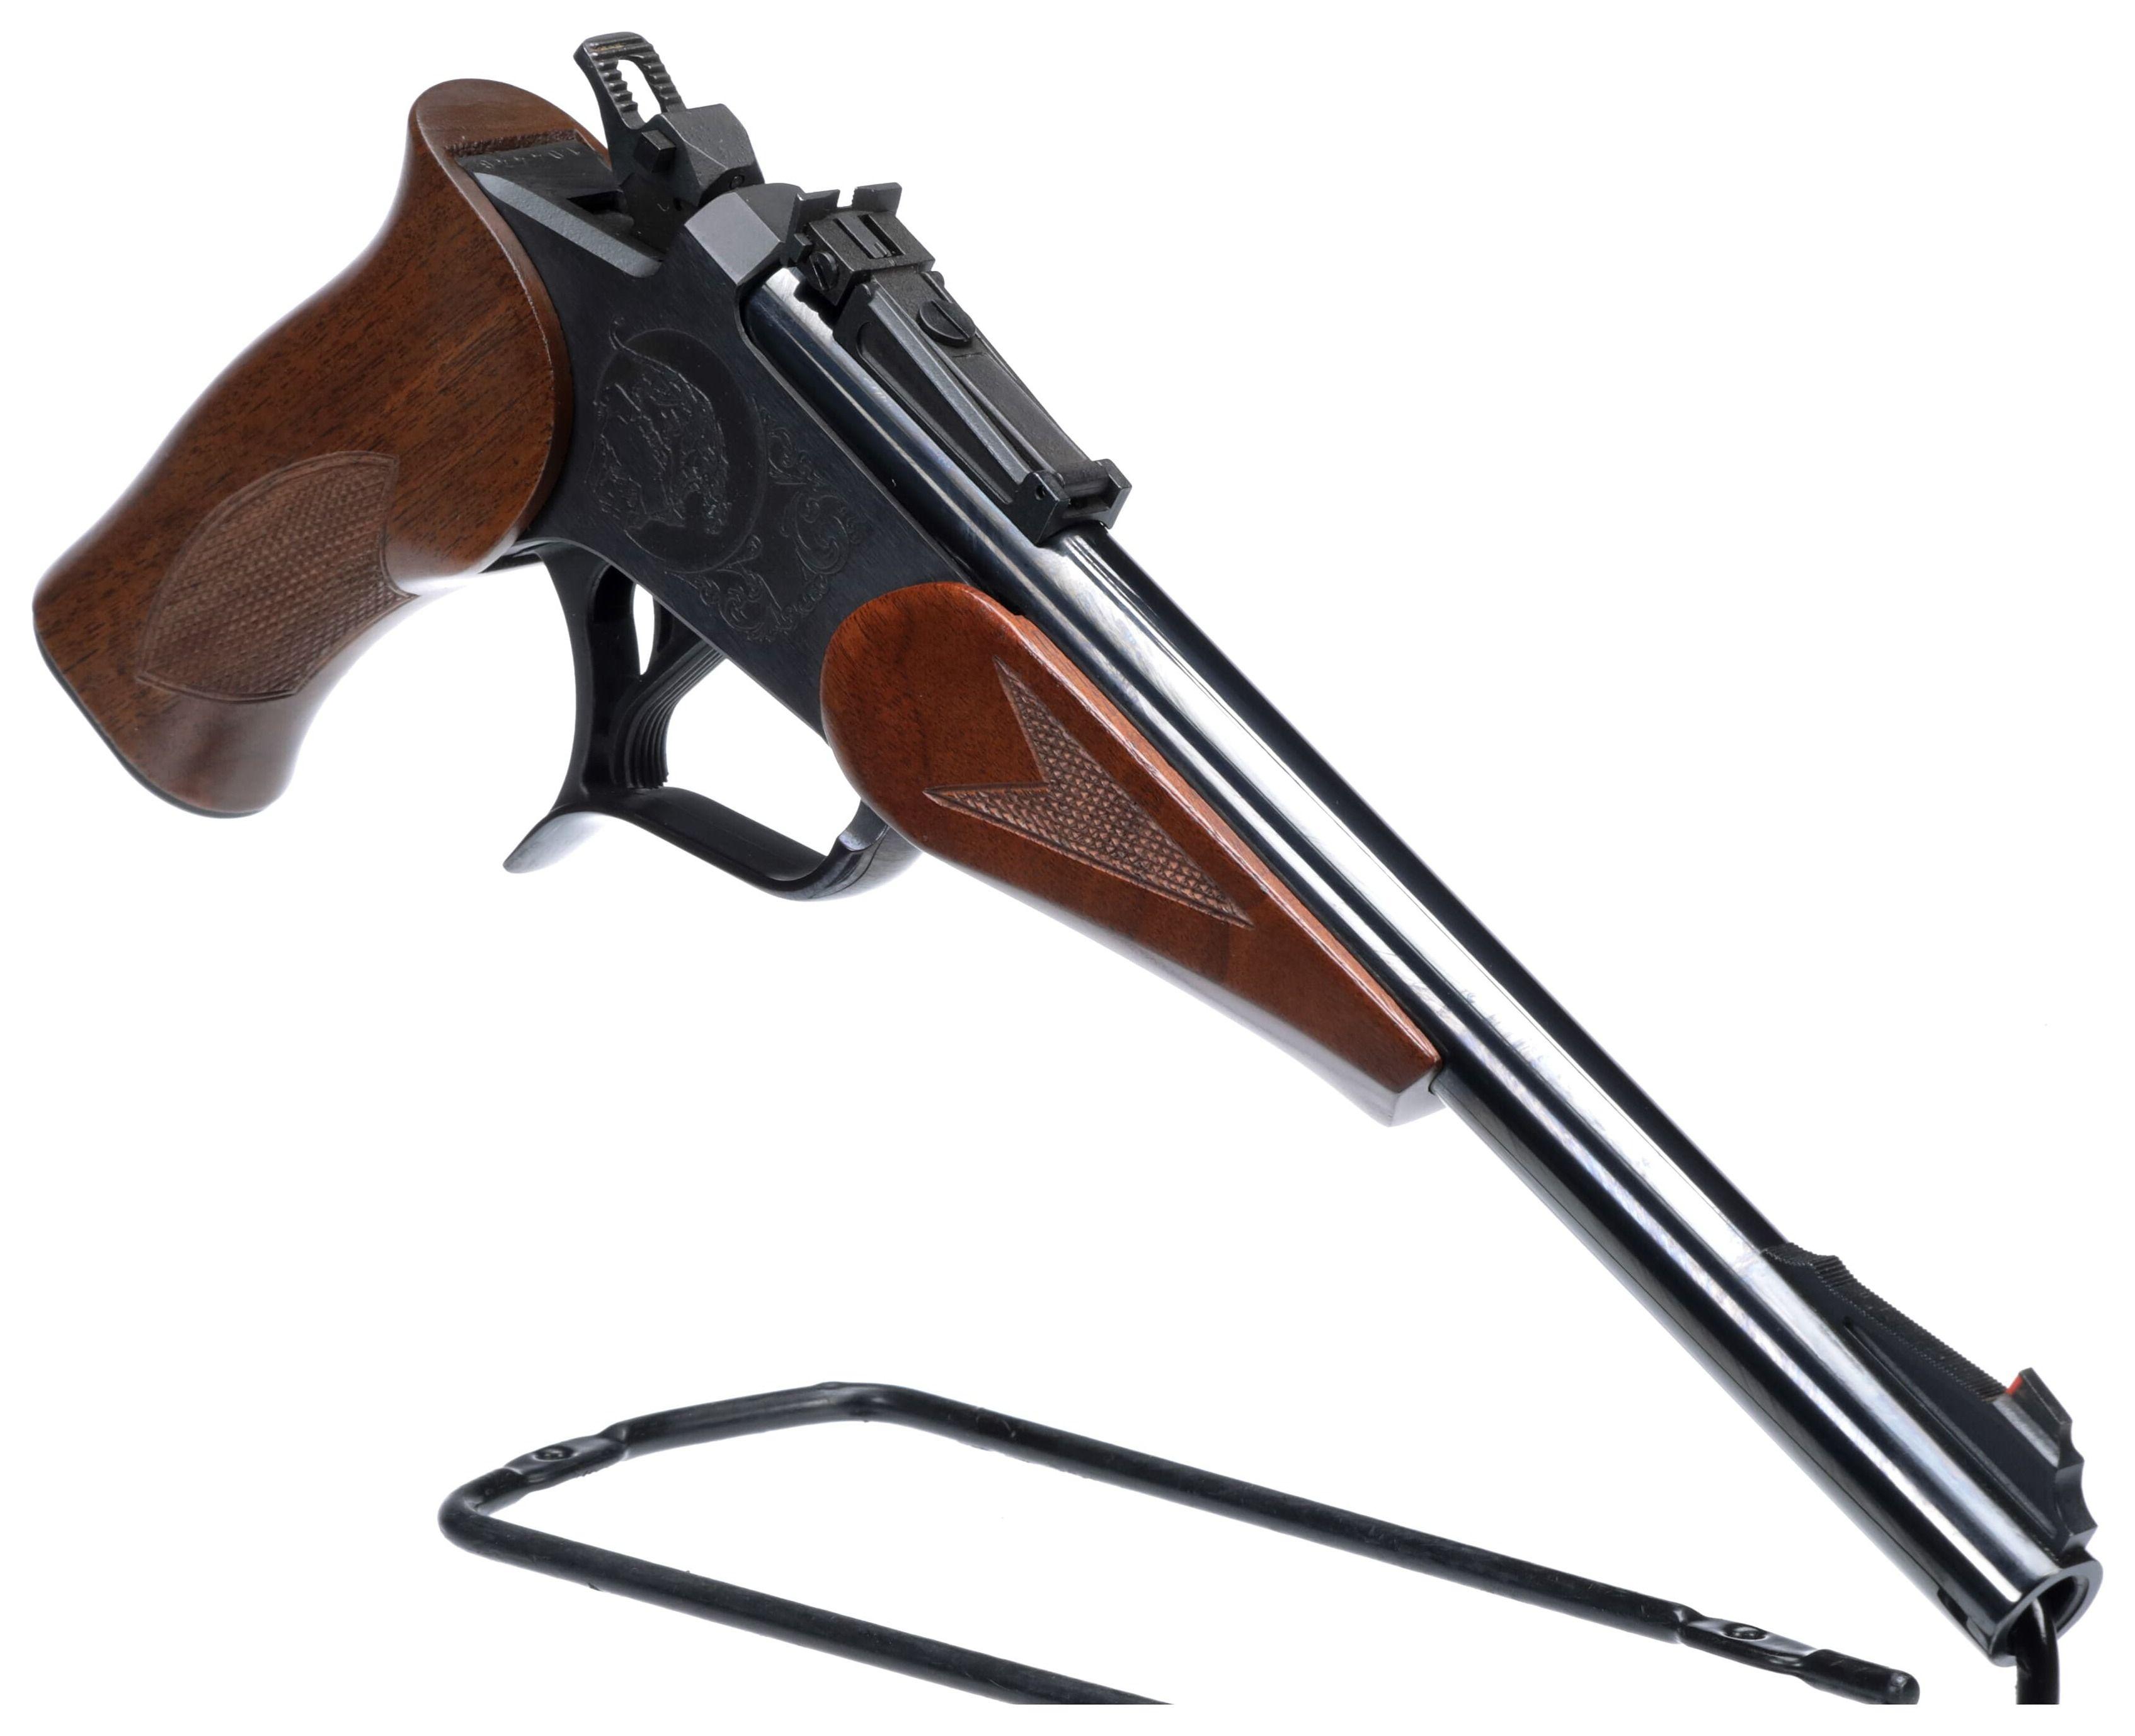 Thompson Center Arms Contender Single Shot Pistol